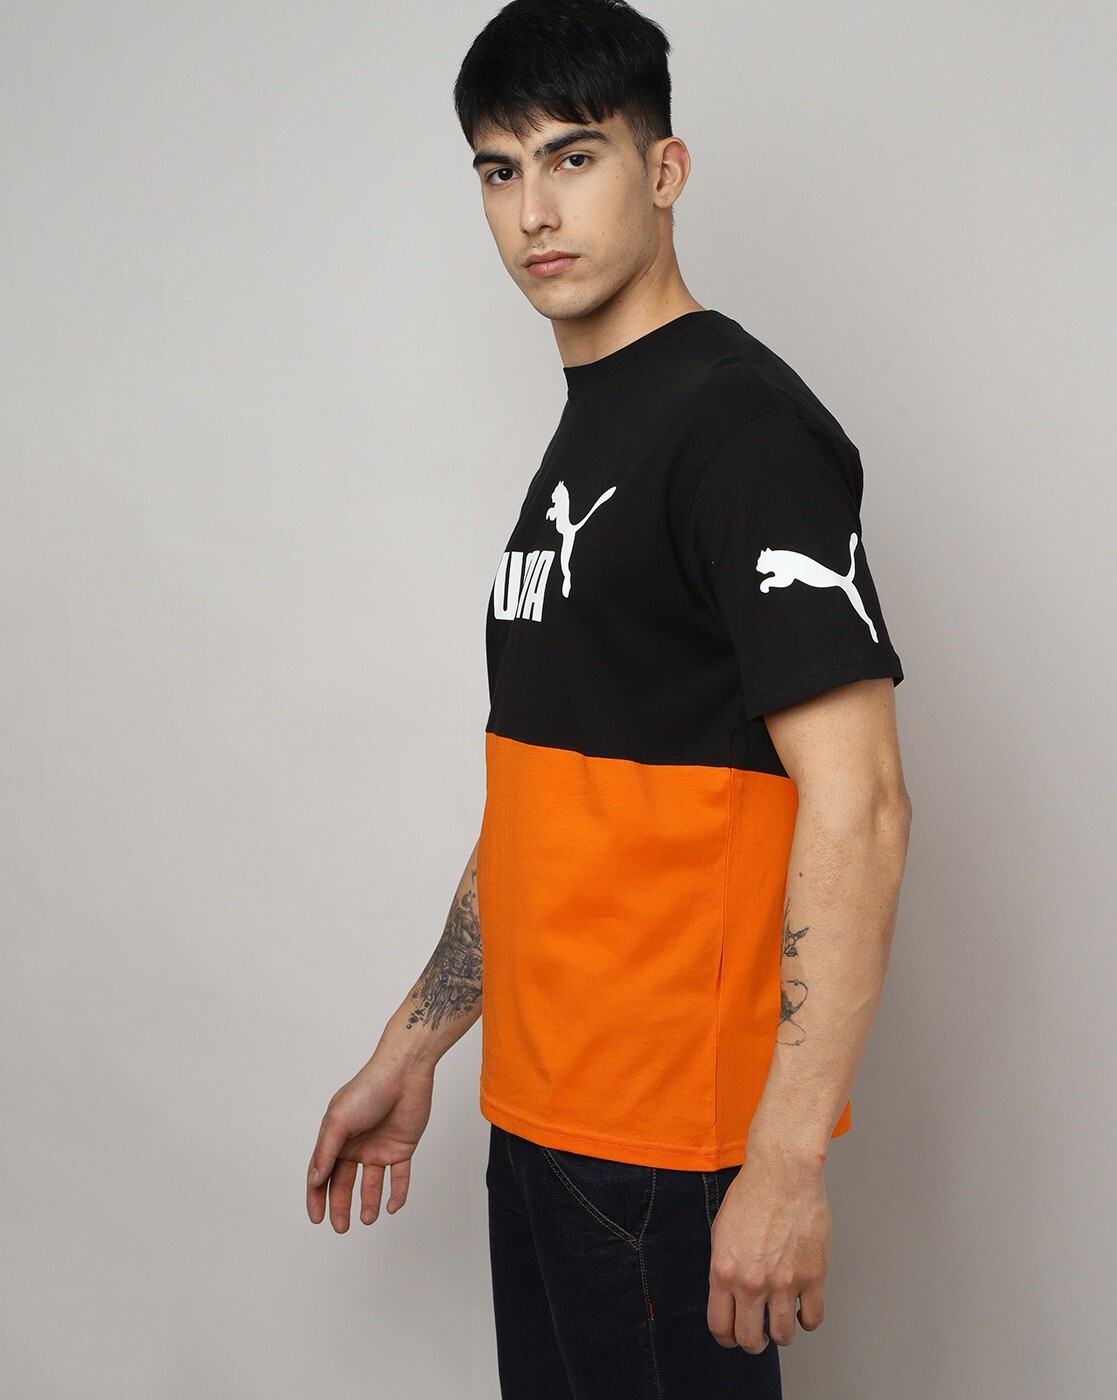 Puma Black Tshirts Orange by & Men Online for Buy